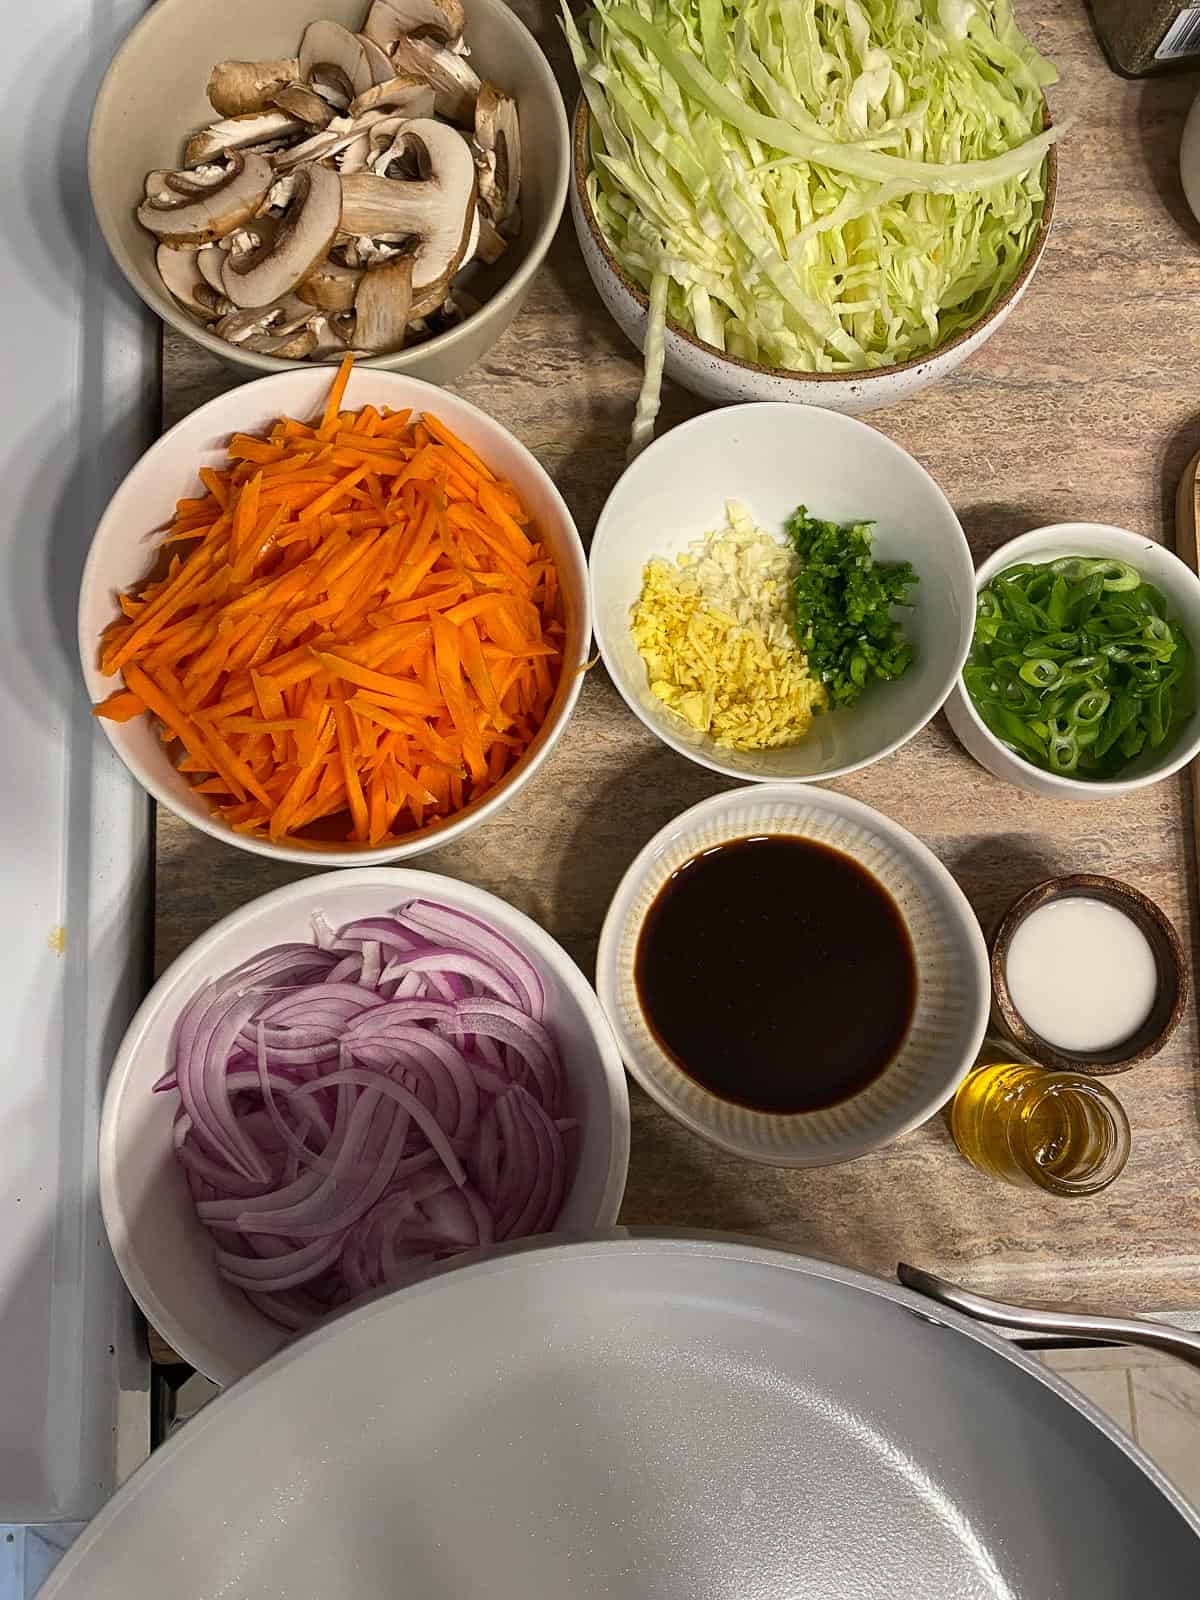 Moo Shu Vegetable ingredients measured out in bowls